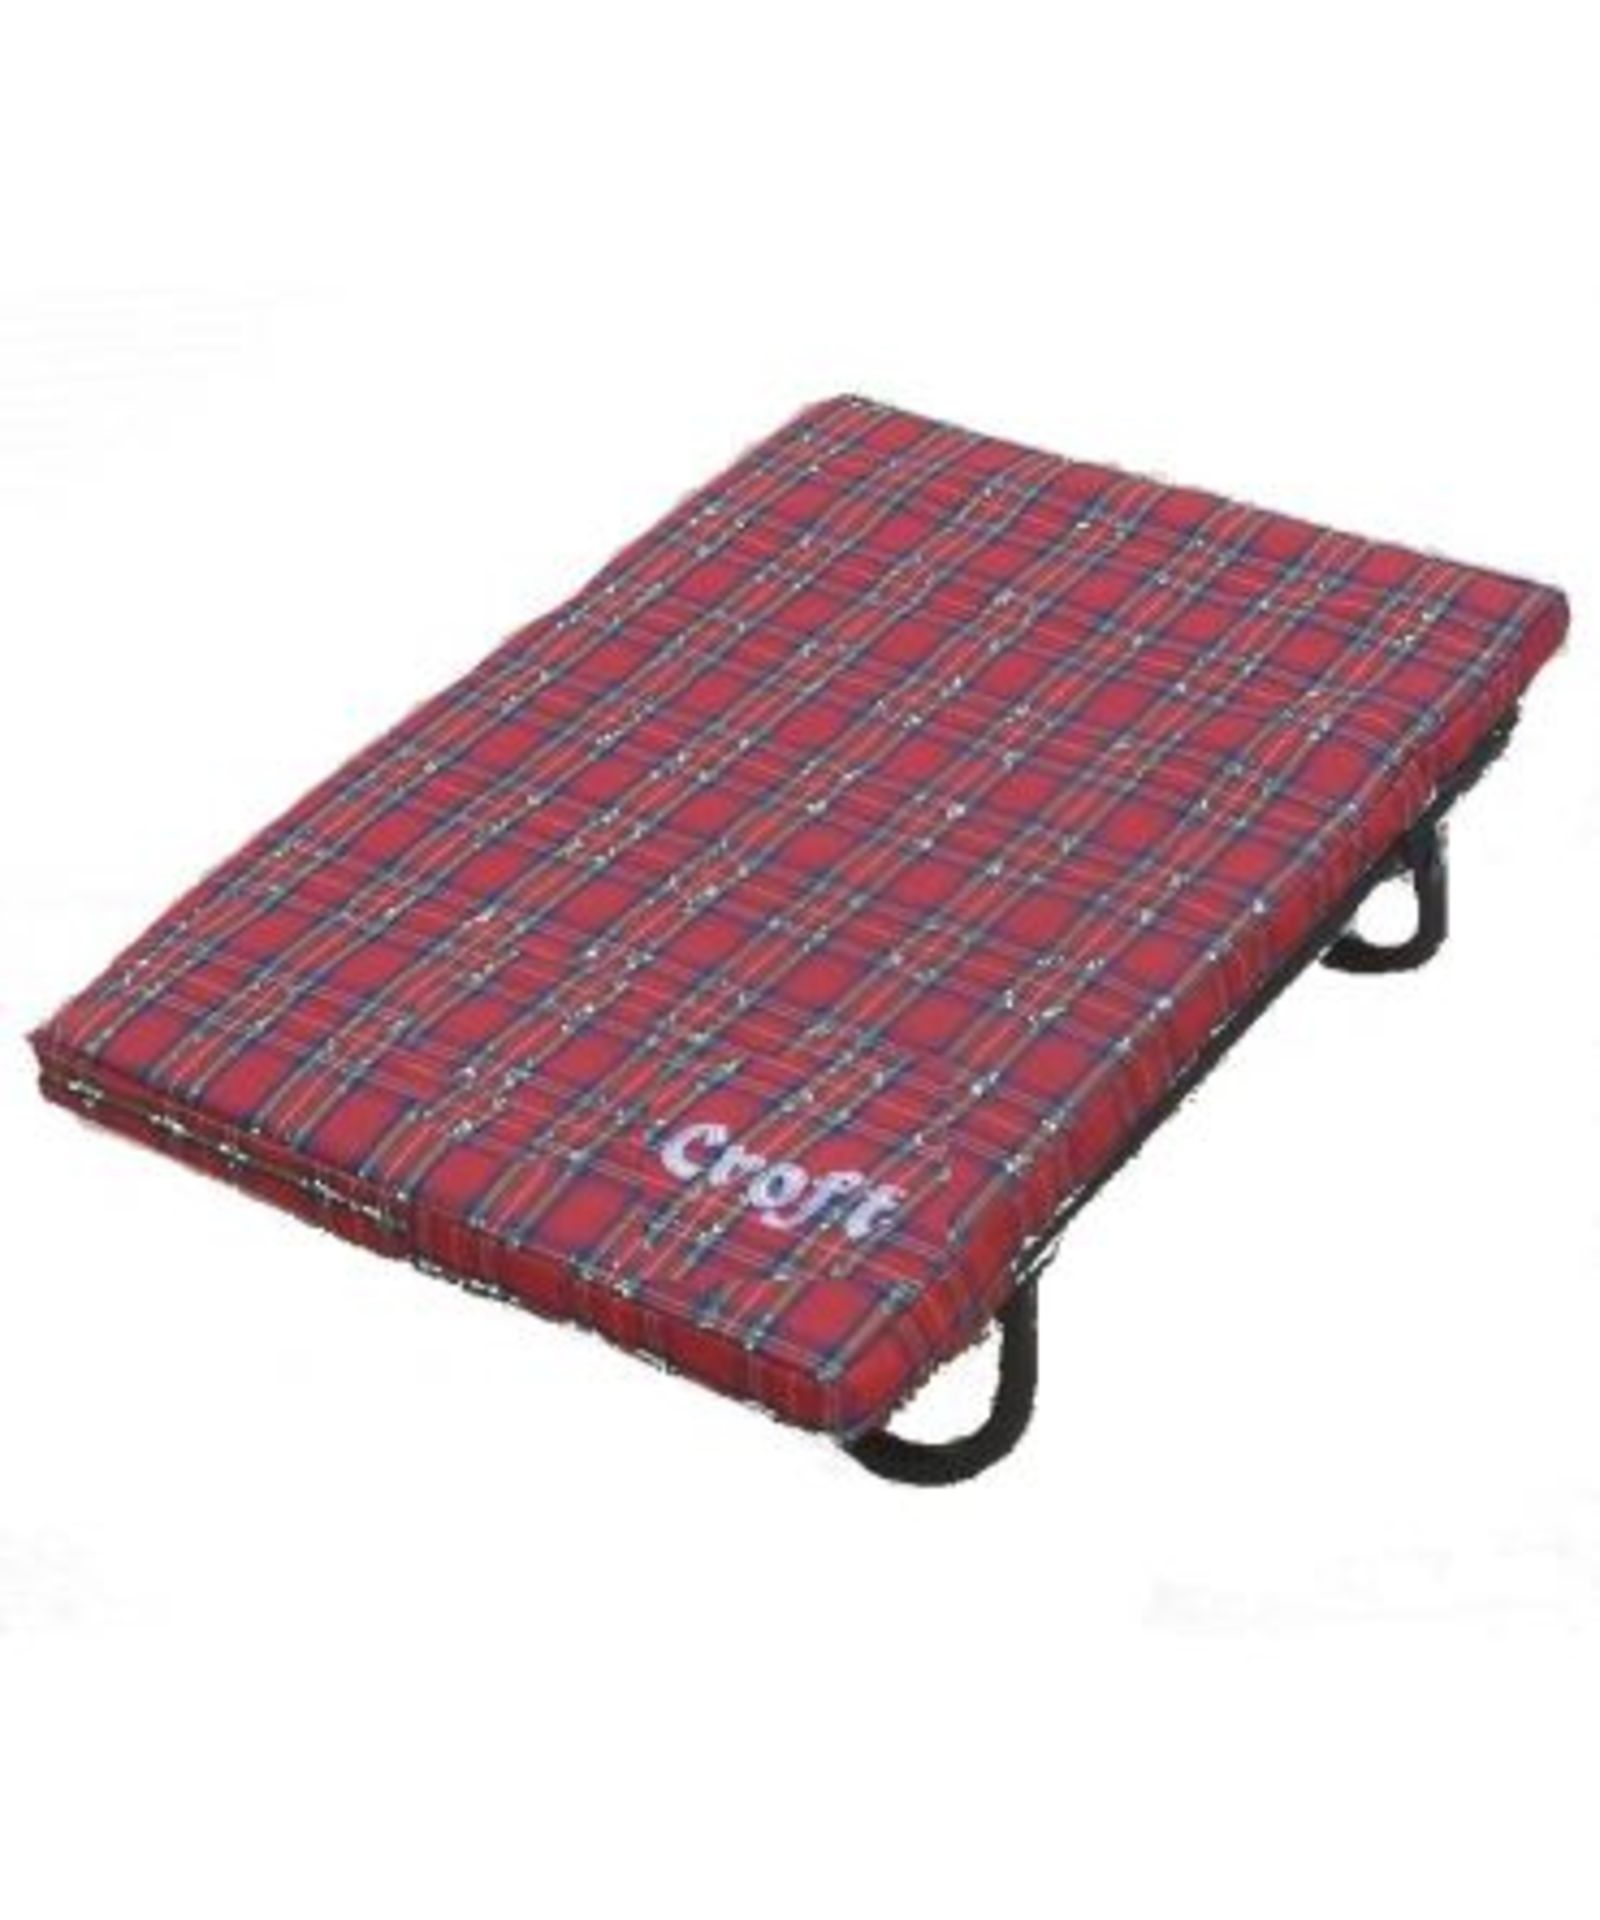 3 X SB110 Foldaway dog beds | Total RRP £186.00